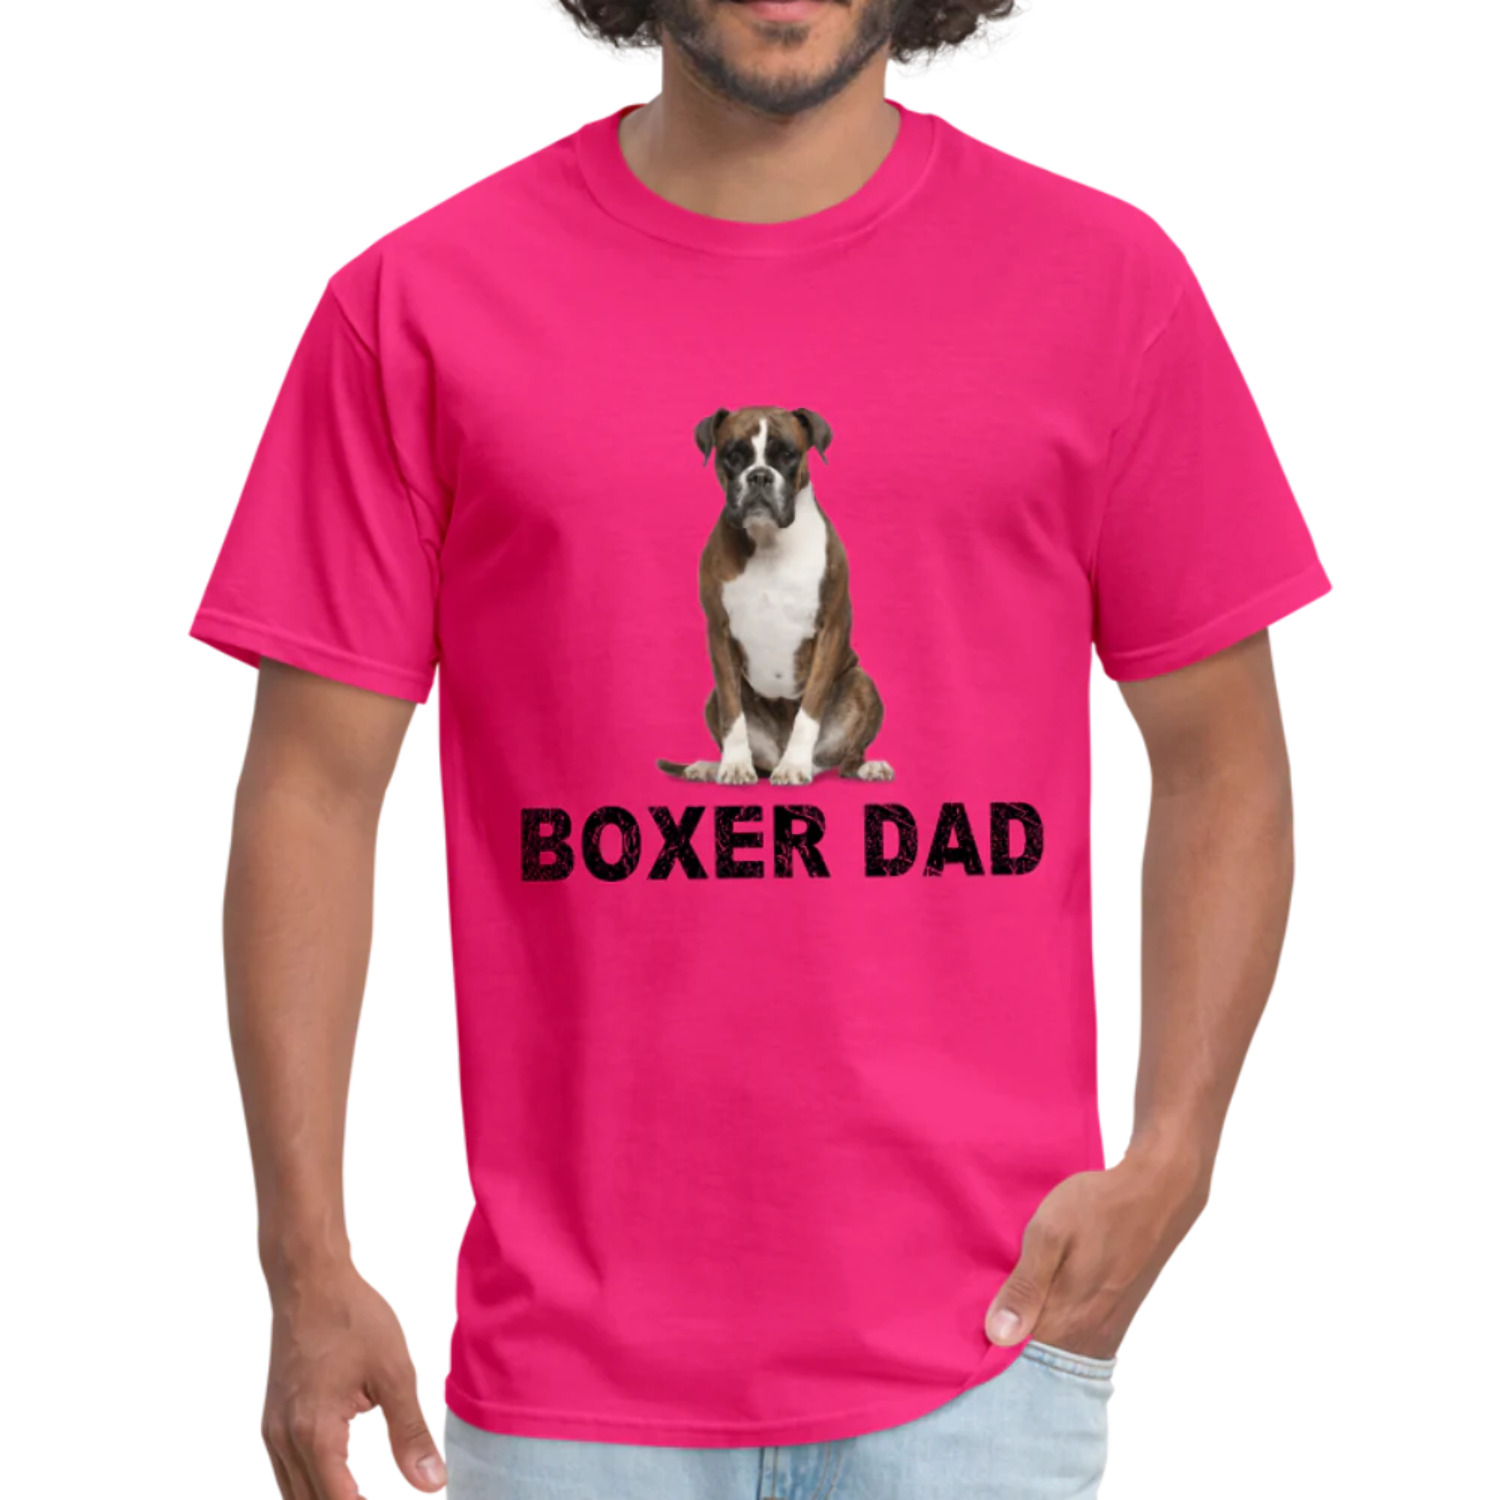 Boxer Dad Shirt, Dog Dad TShirt, Gift For Dog Lover, Dog Tshirt, Gift for Boxer Dad, Dog Papa Tee, Dog Dad Gift, Boxer Lover Shirt - image 3 of 11